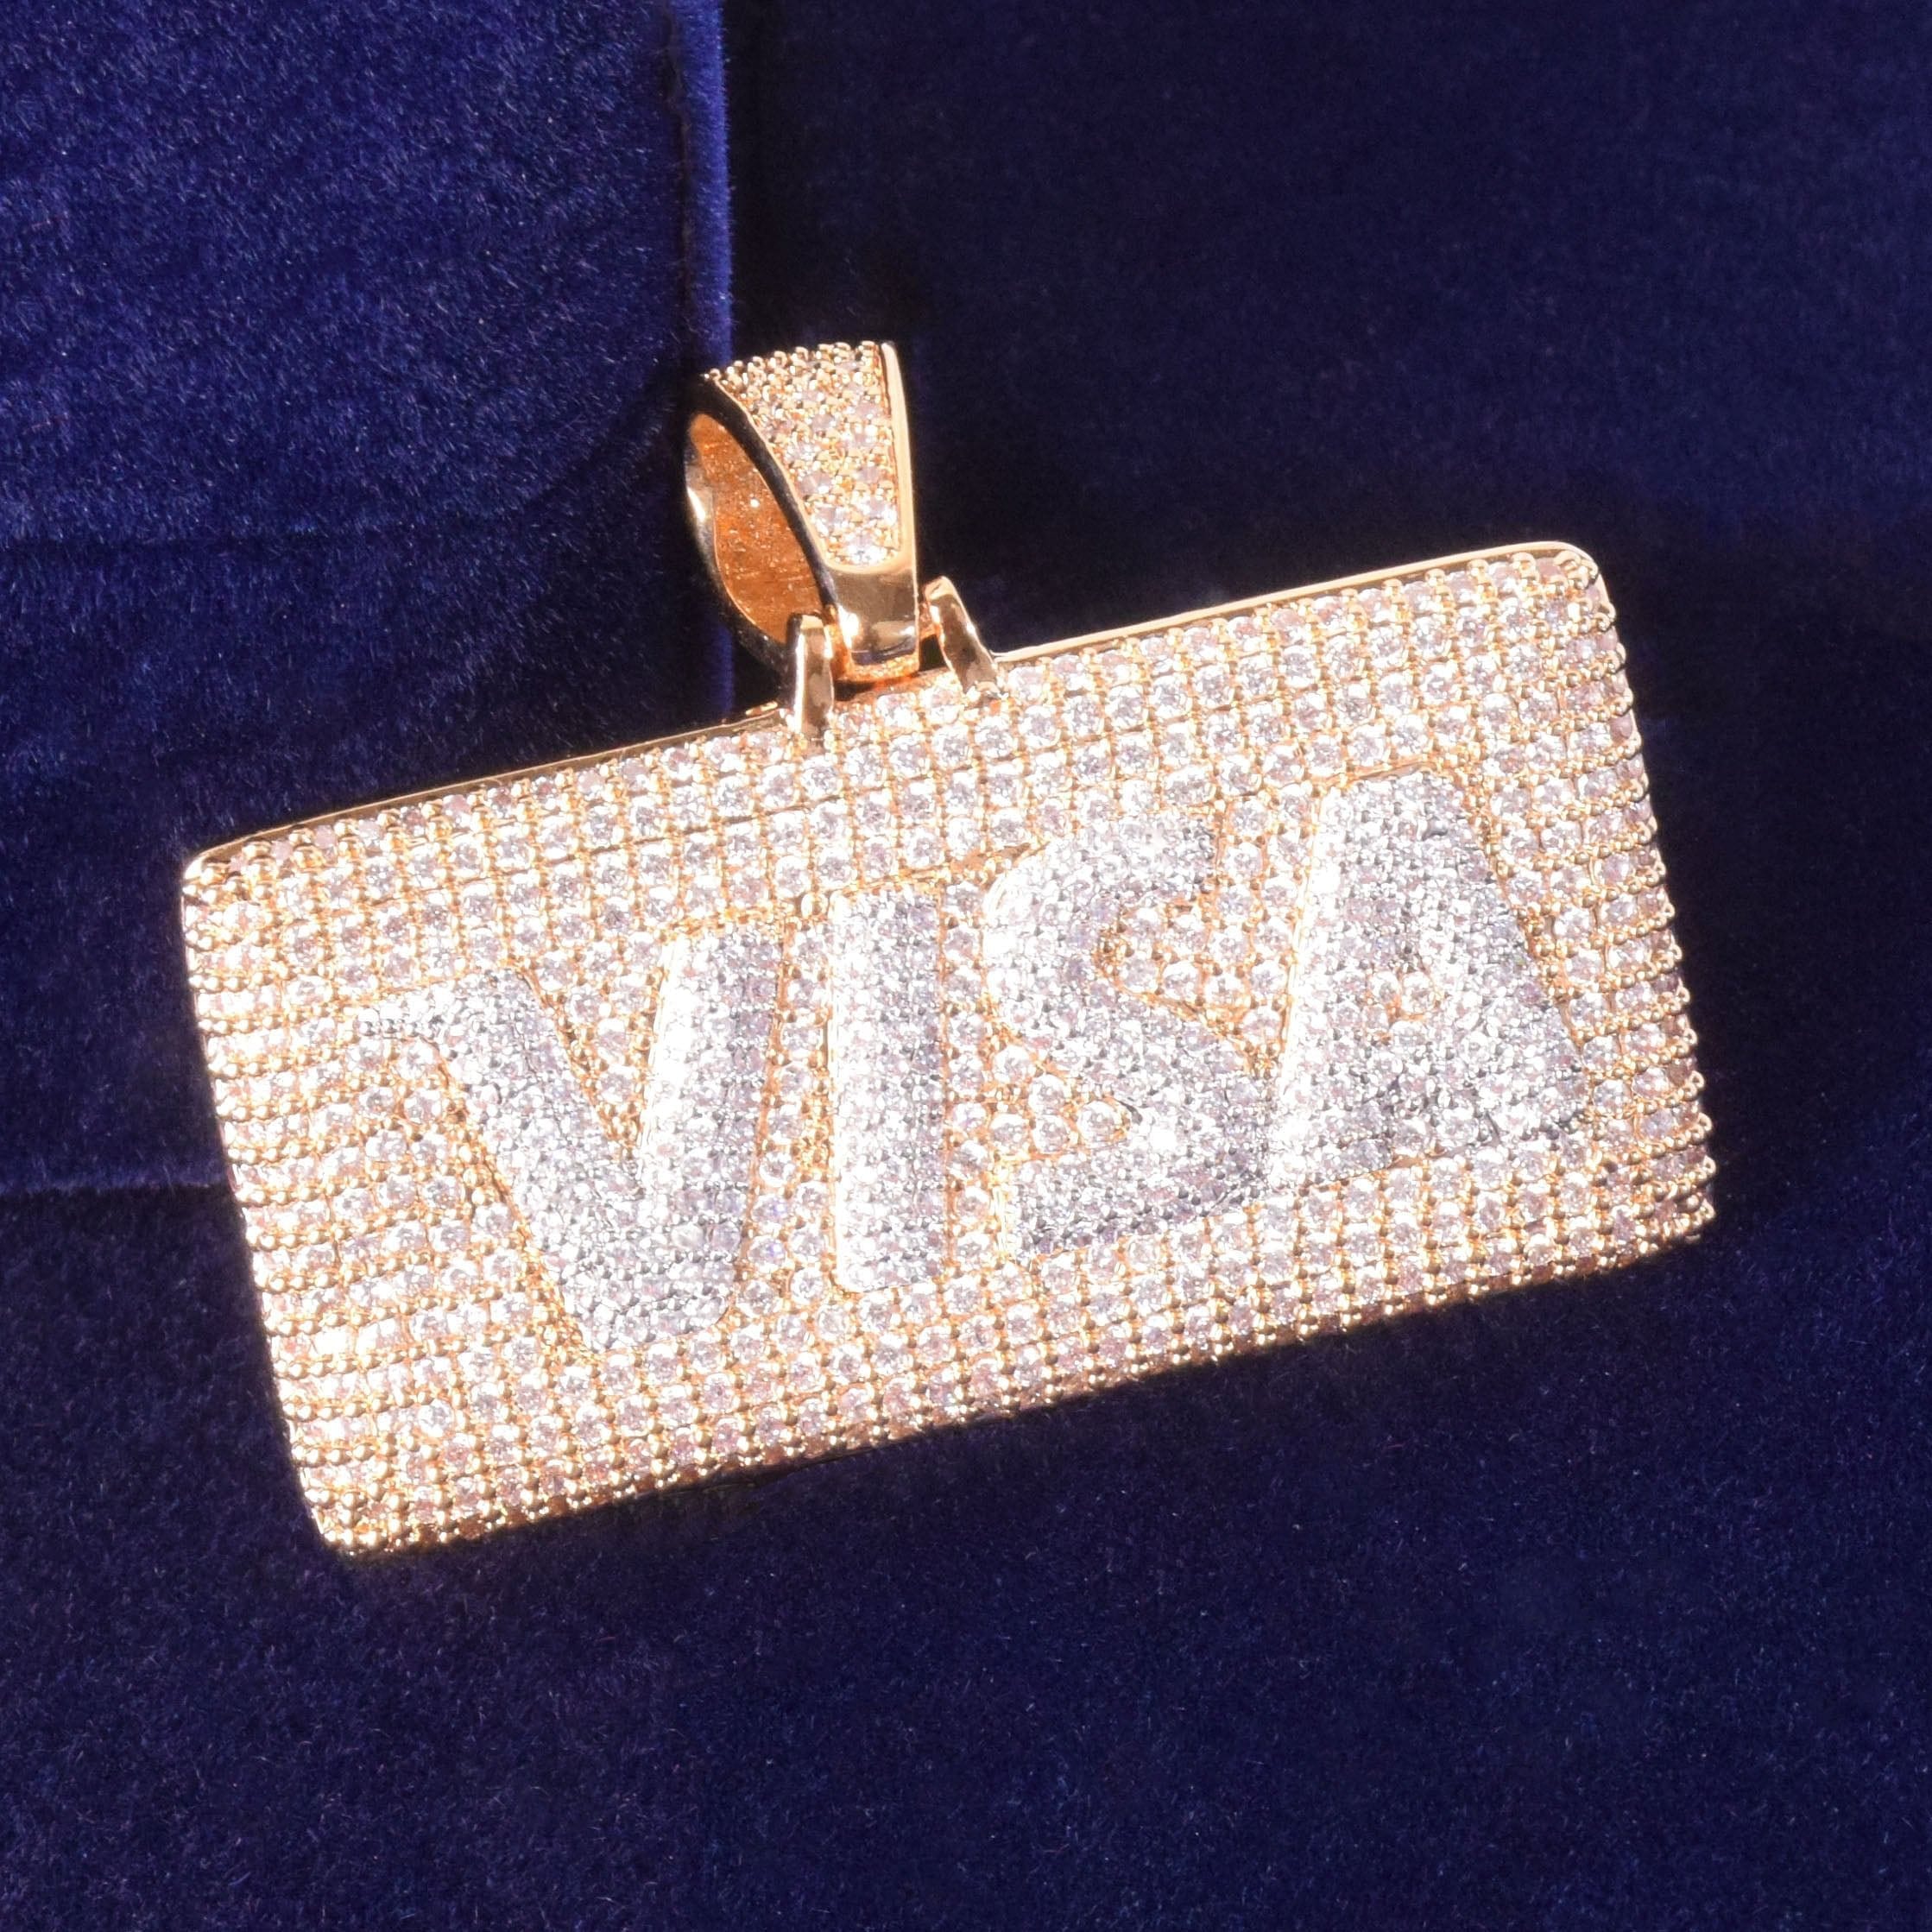 VVS Jewelry hip hop jewelry Micropave VISA Card Tag Chain